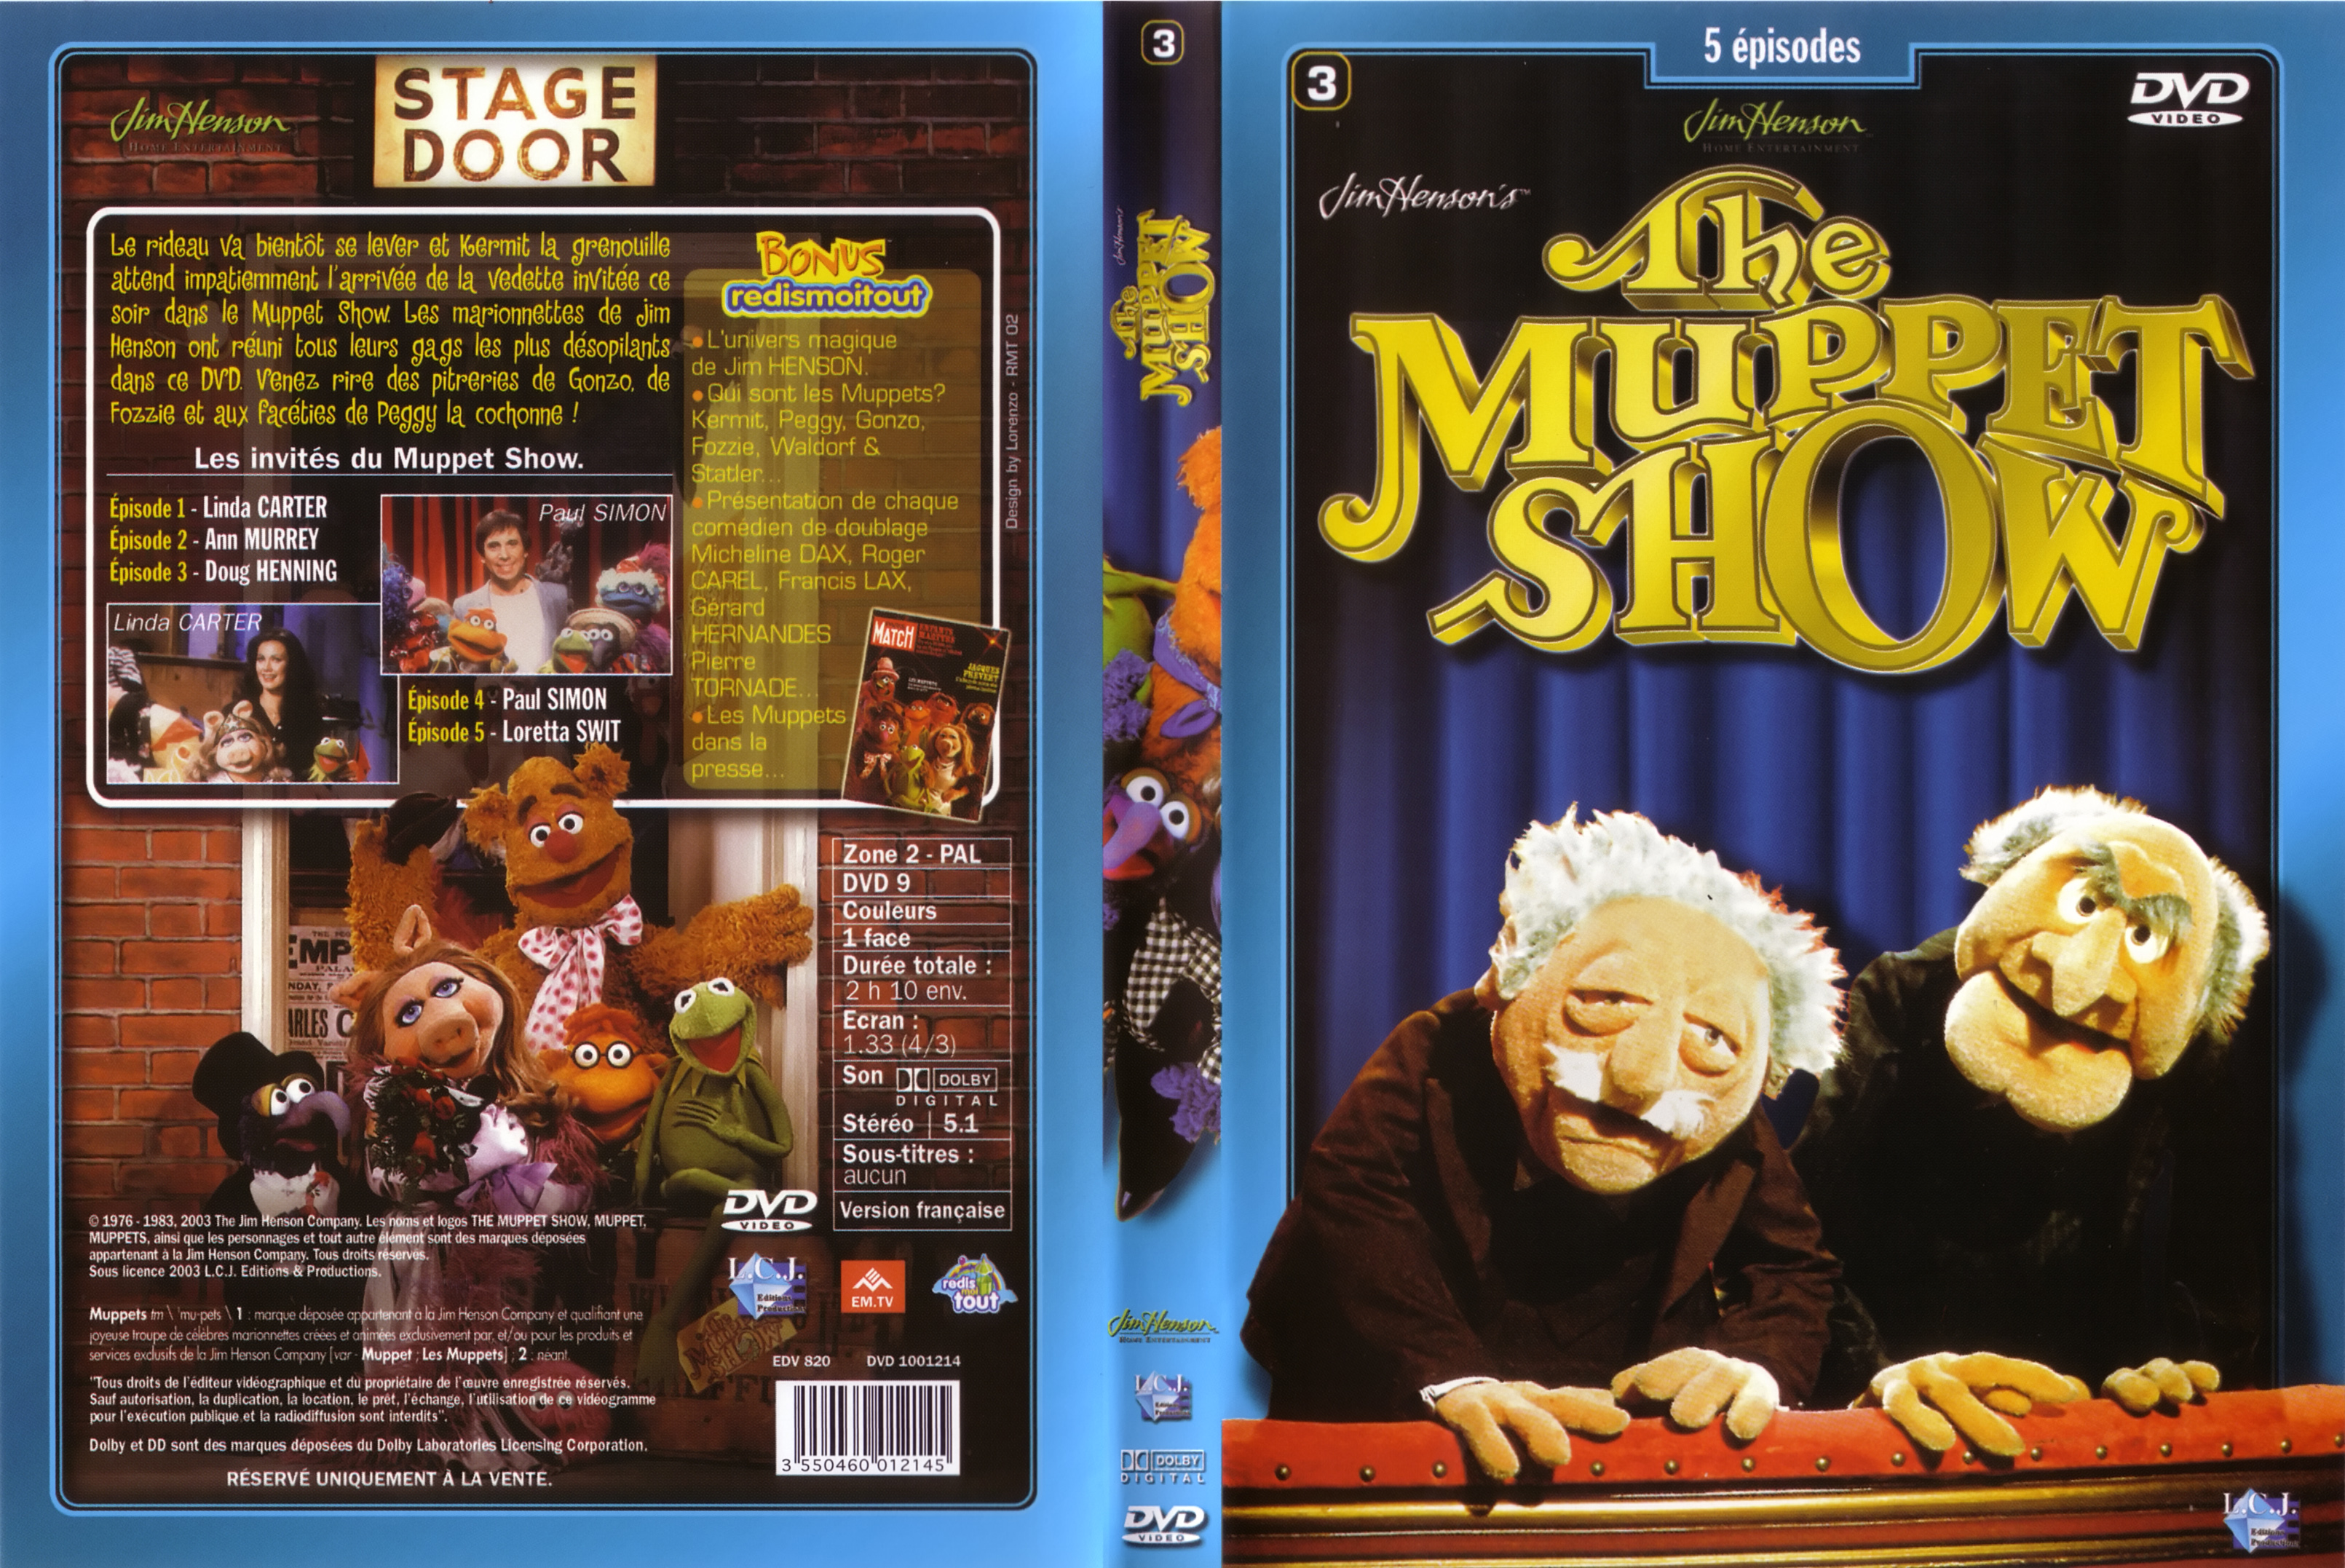 Jaquette DVD The muppet show vol 2 DVD 3